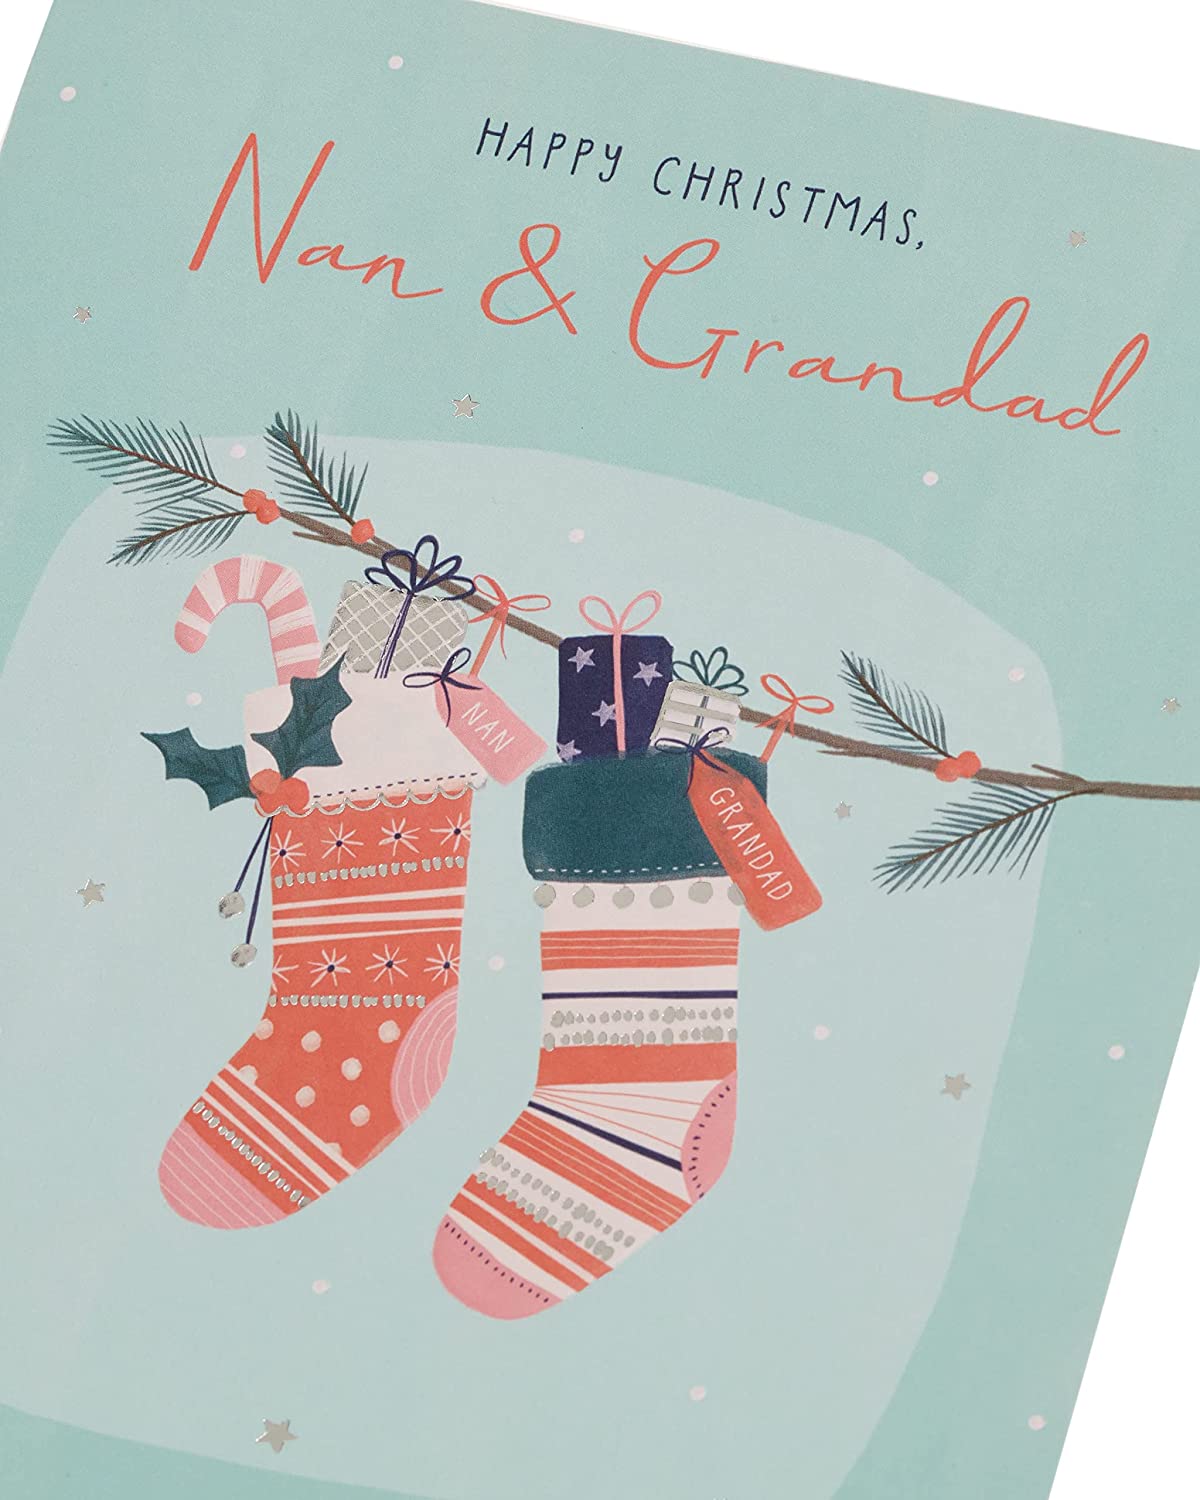 Nan & Grandad Christmas Card Cute Design with Christmas Stockings and Presents 